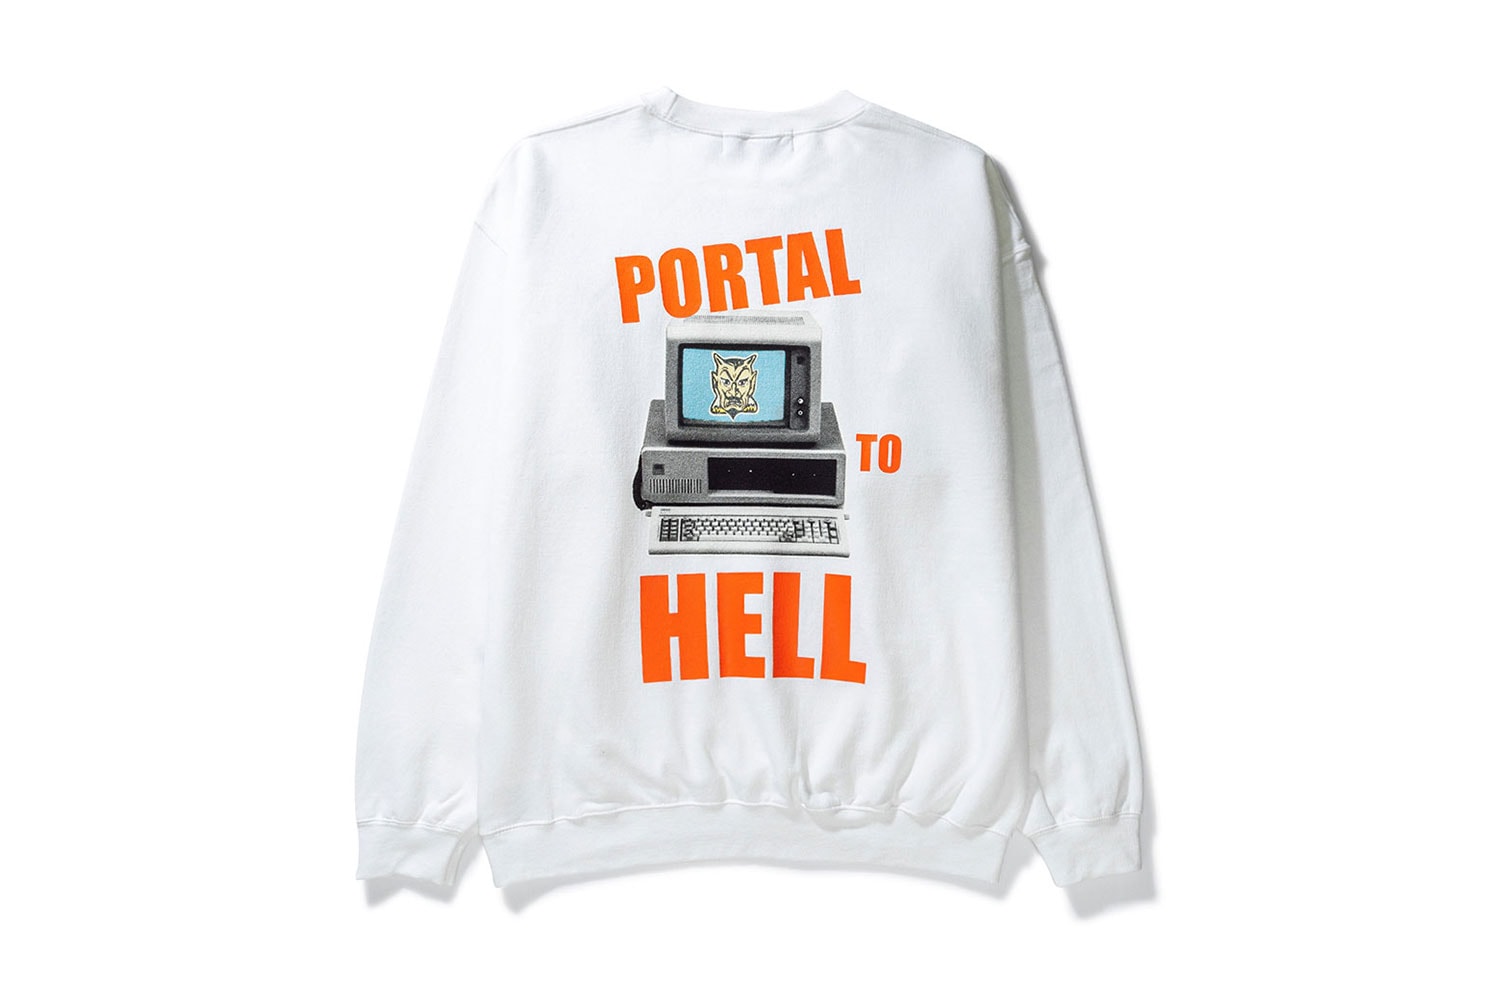 Hypebeast Cali Thornhill Dewitt Collab Interview internet 1.0 privacy designs behind the scenes hoodie sweatshirt sweatpants portal to hell